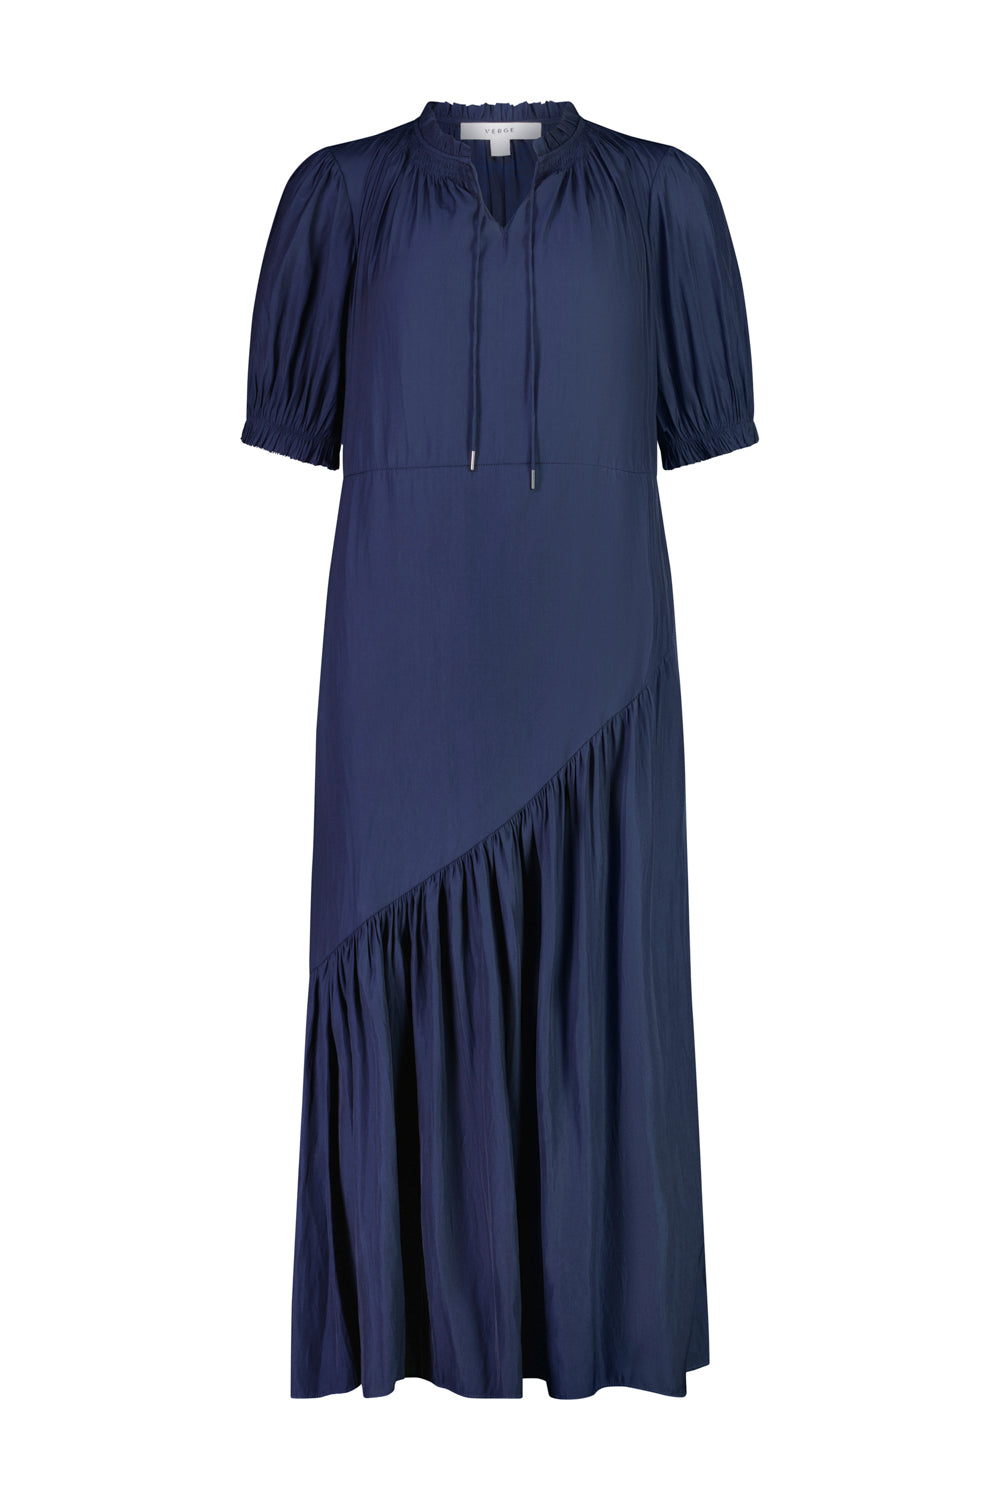 Reflection Dress - Blue Nova - VERGE